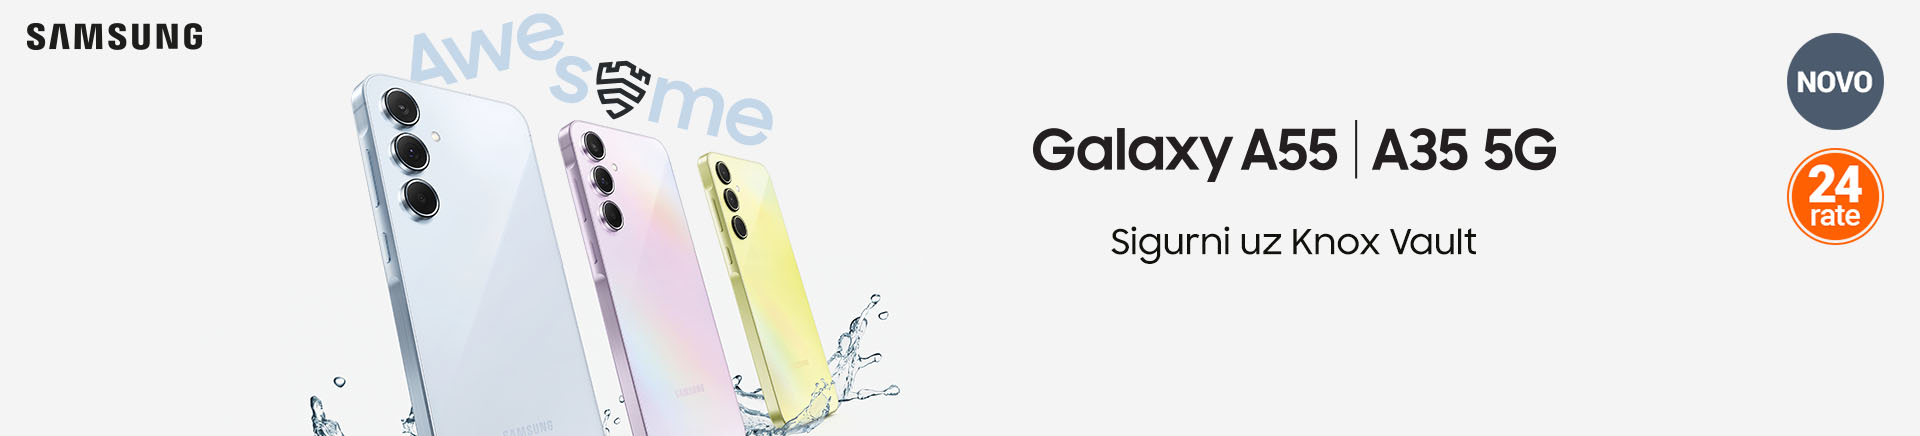 HR~Samsung Galaxy A35 i A55 MOBILE 760x872 LANDING.jpg